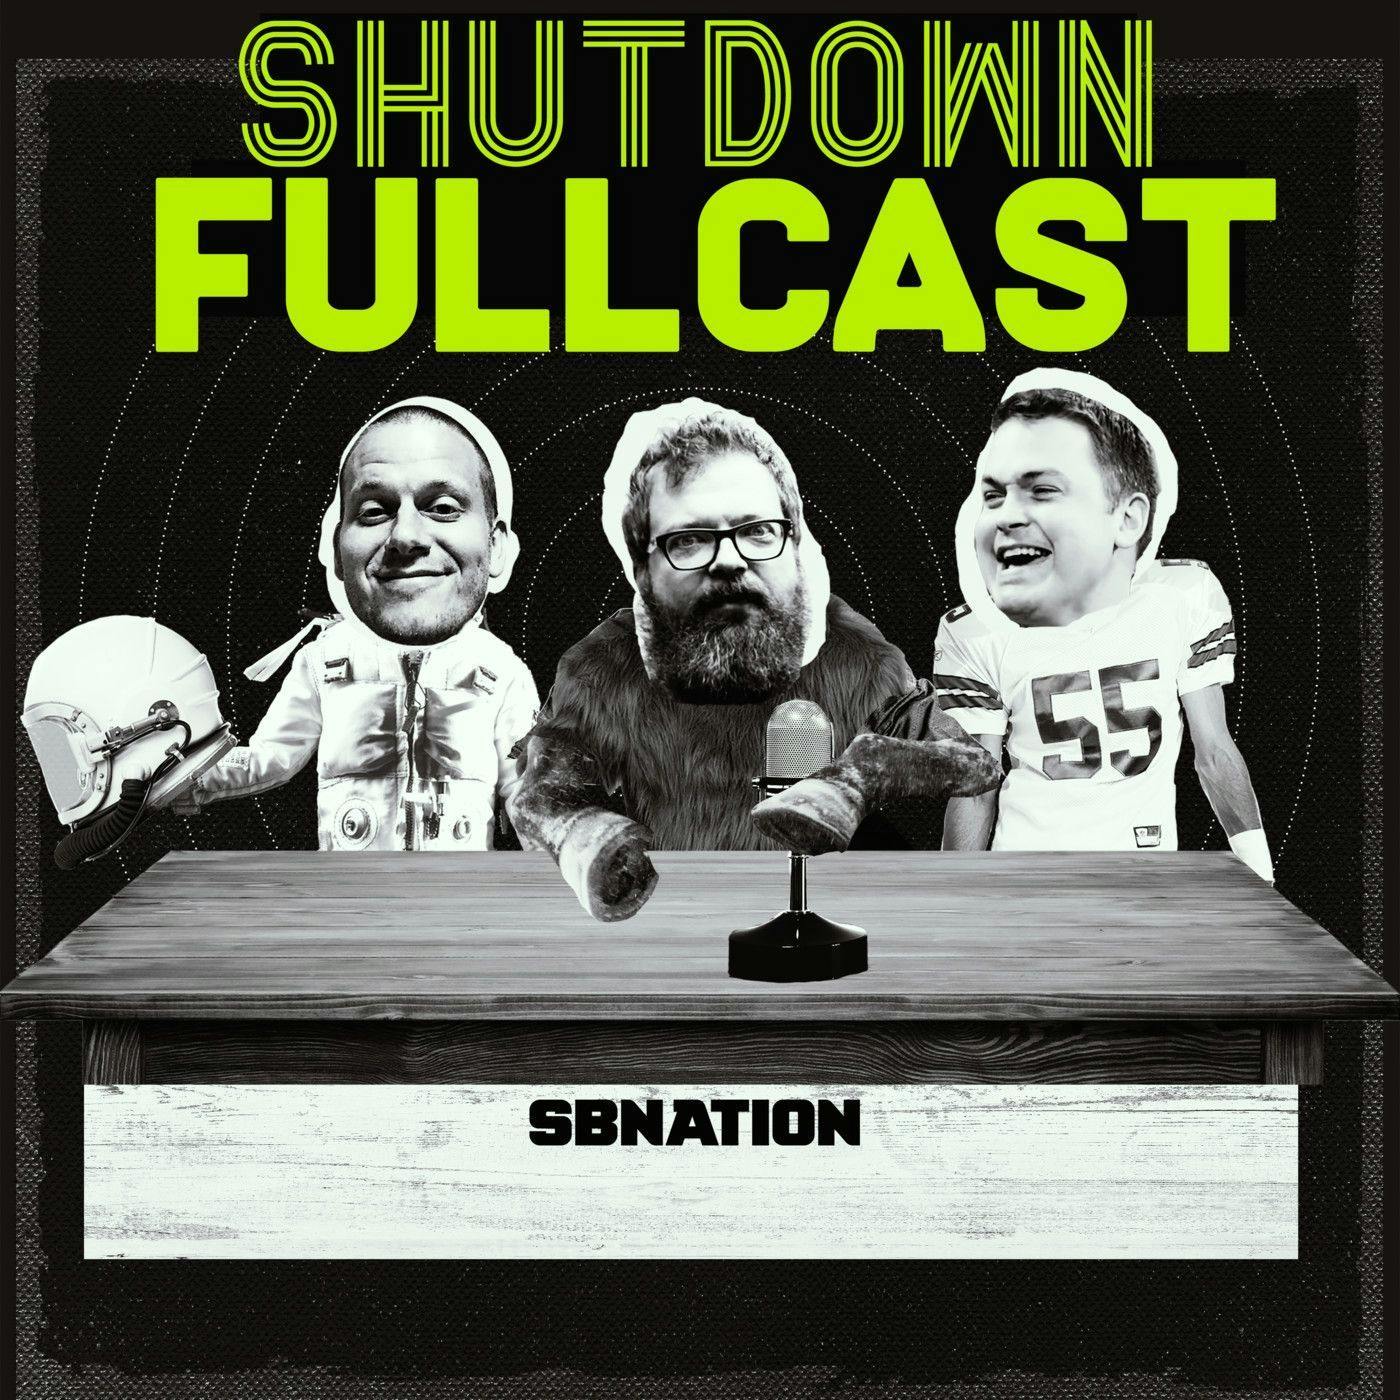 Shutdown Fullcast 7.41: Unsourced Coaching Hiring and Firing Rumors Ahoy!